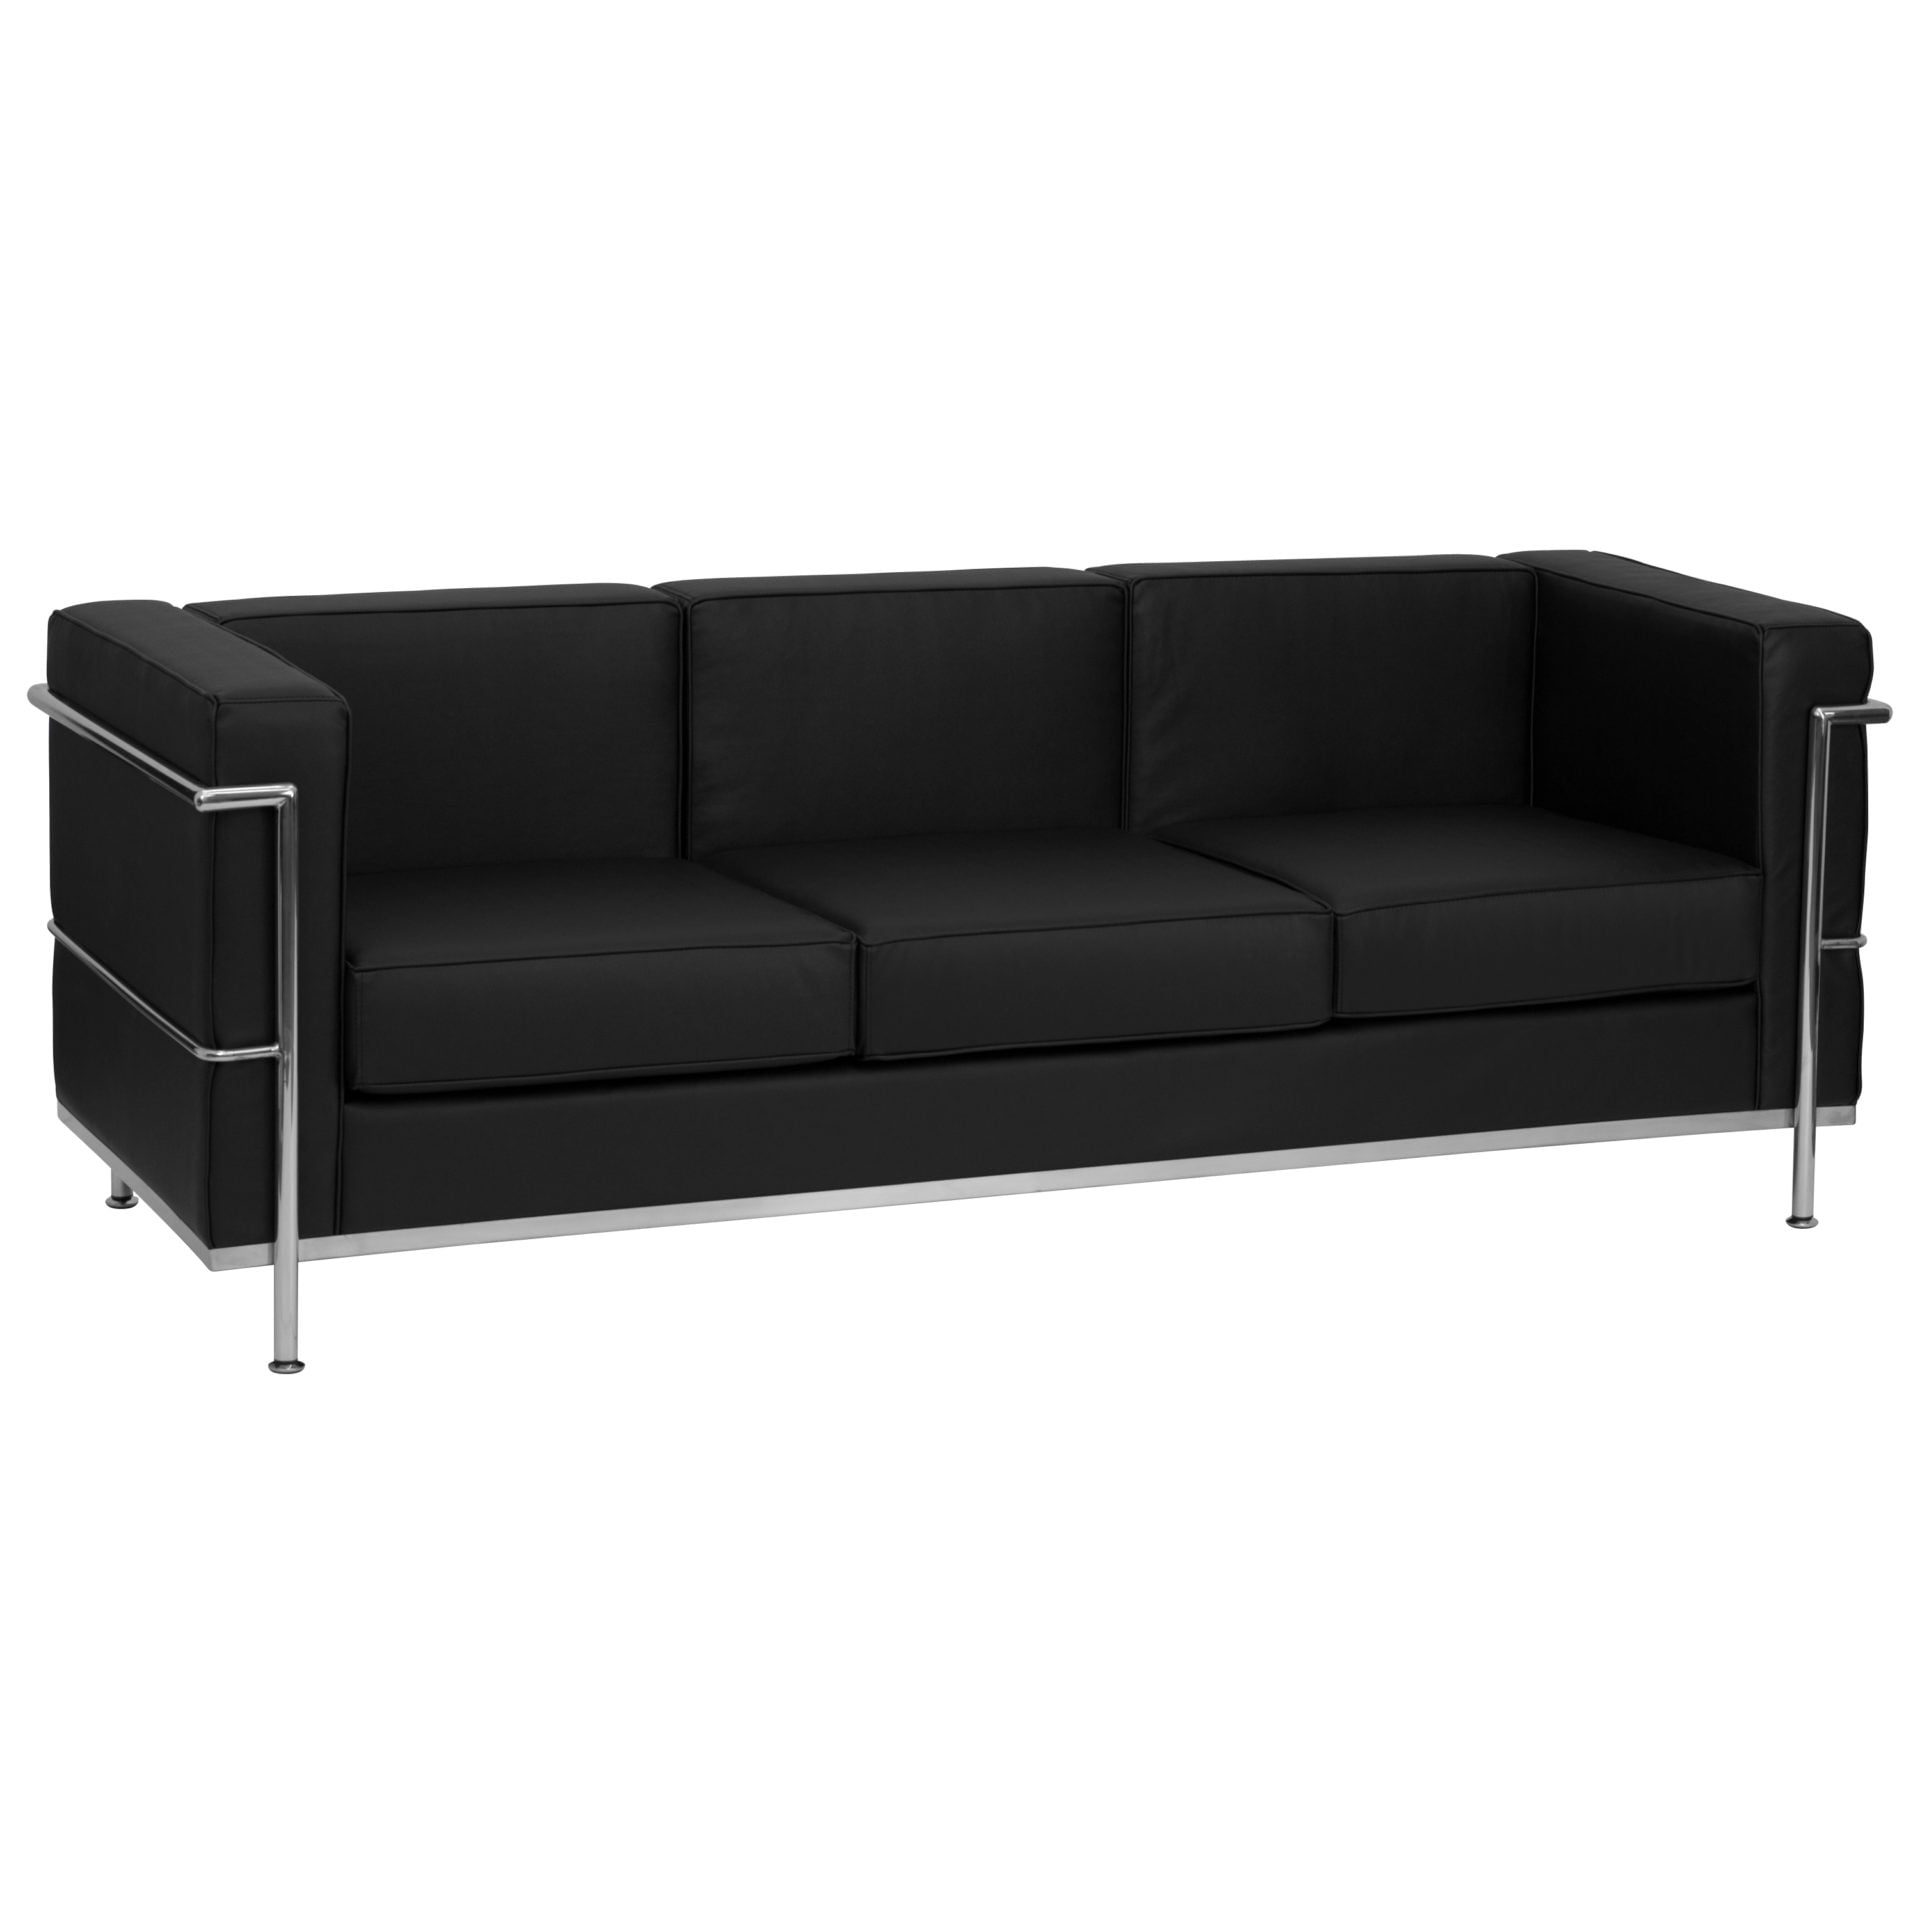 HERCULES Regal Series Contemporary Black Leather Sofa